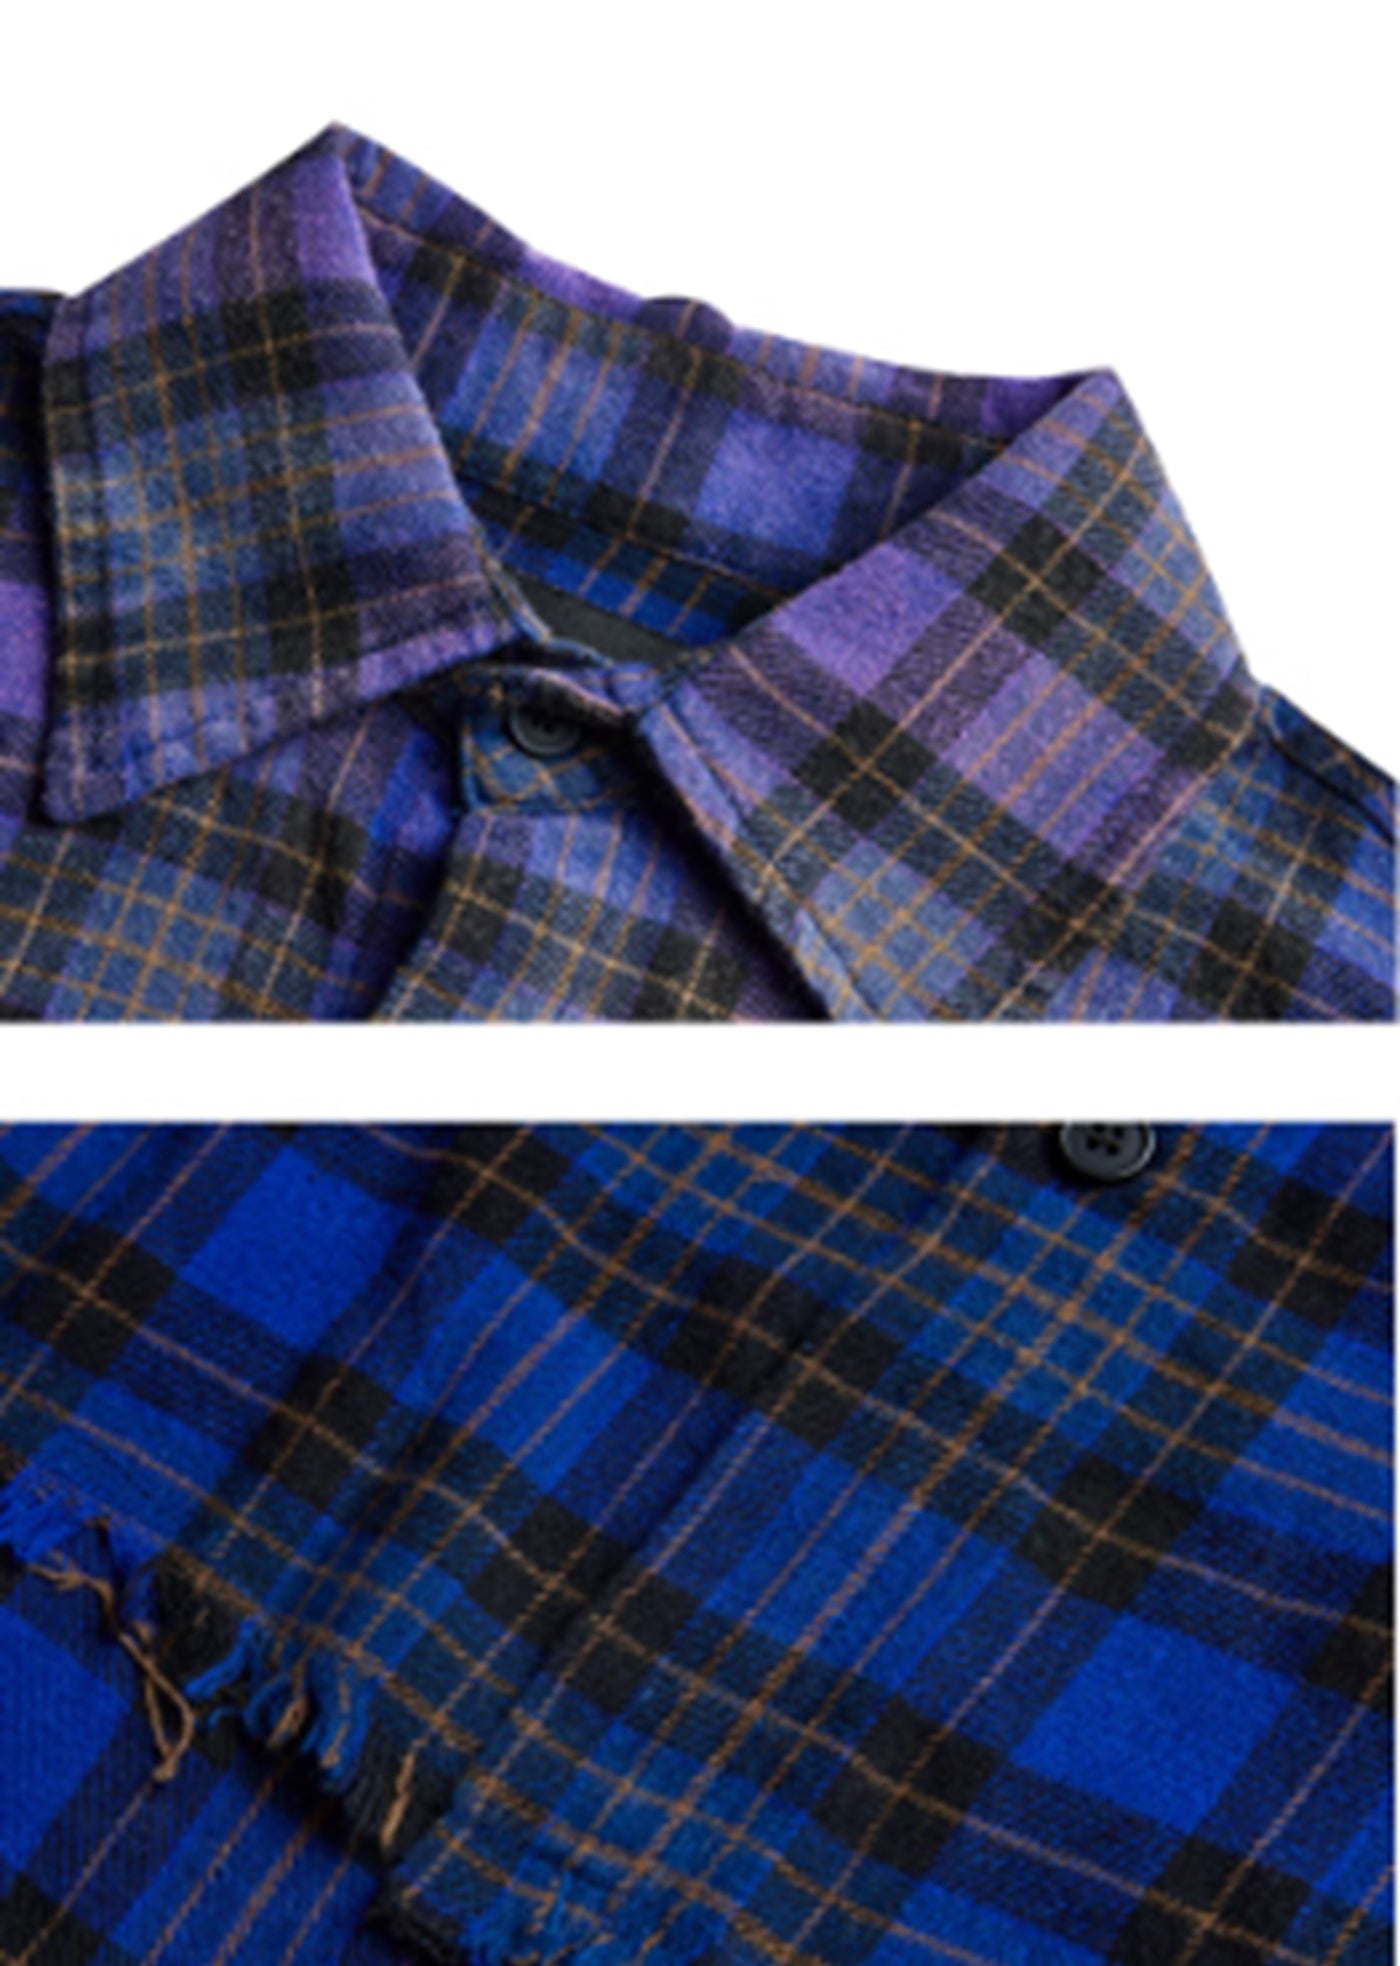 【MAXDSTR】Gradient purple color plaid design distressed short sleeve shirt  MD0150